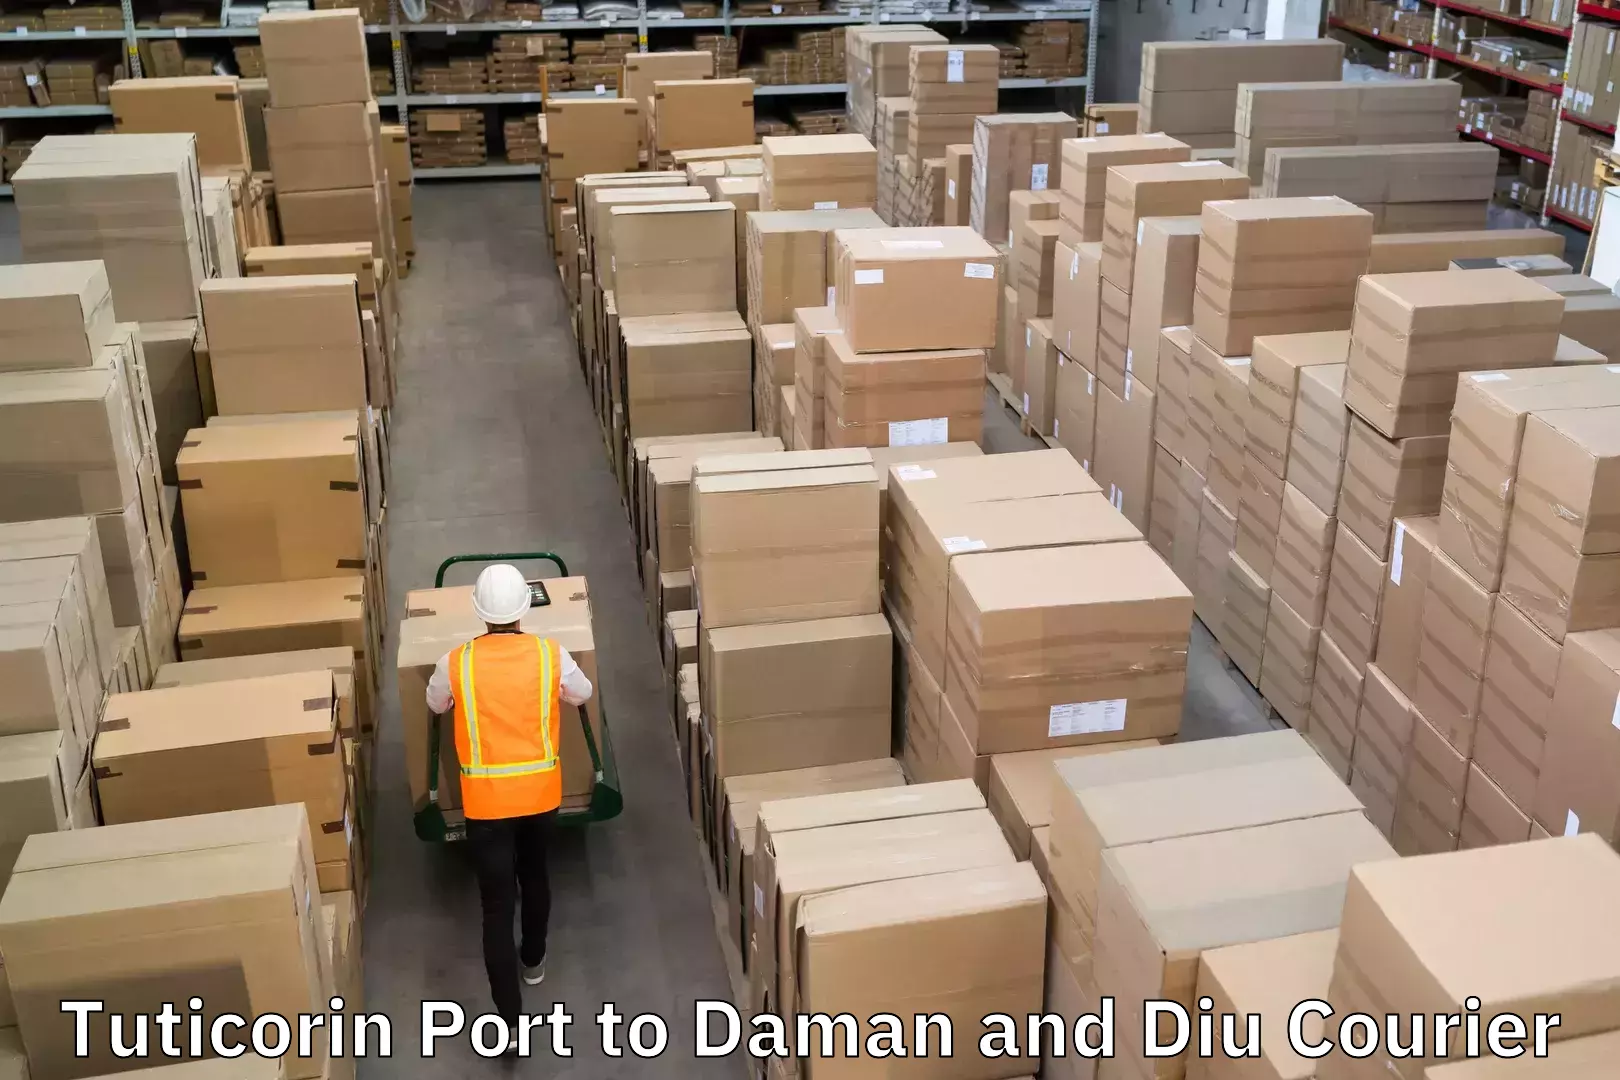 Express mail service Tuticorin Port to Daman and Diu